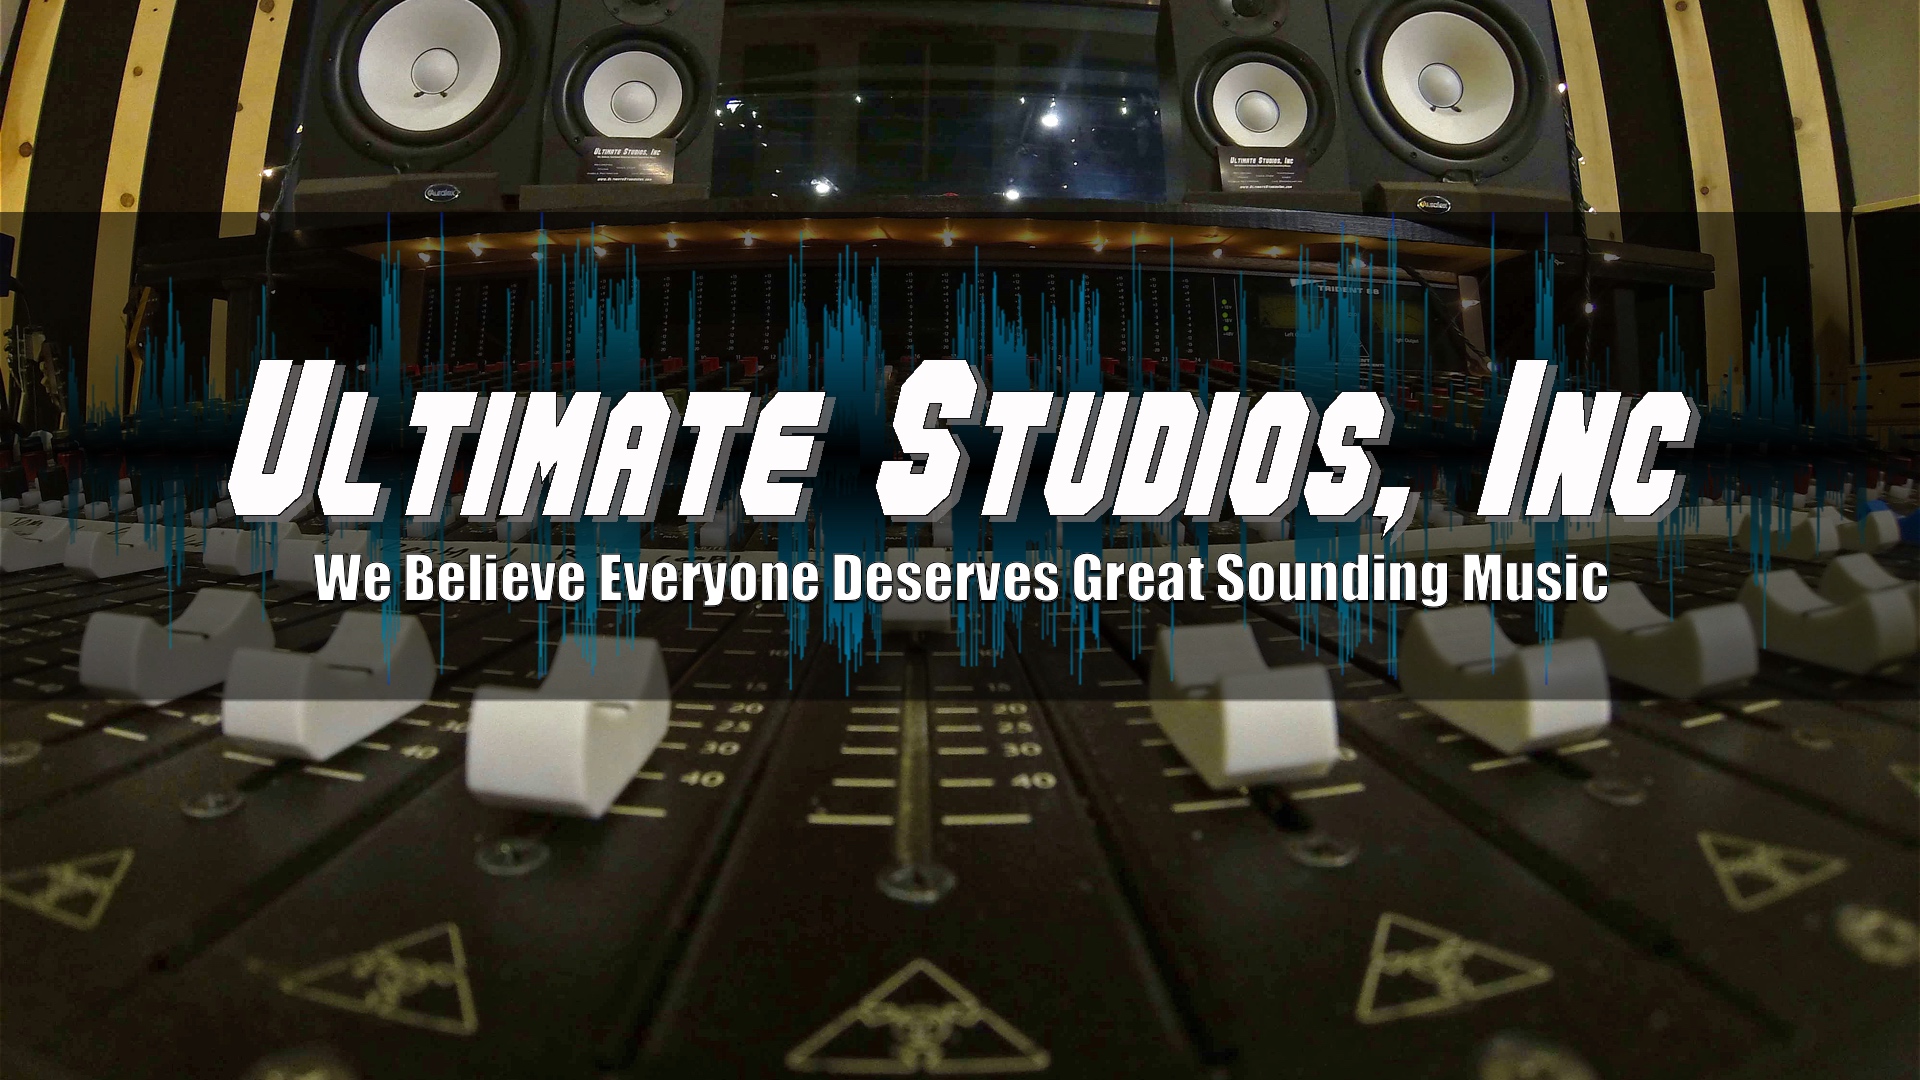 Recording Studio Trailer Los Angeles Music Studio Mixing studio Van Nuys